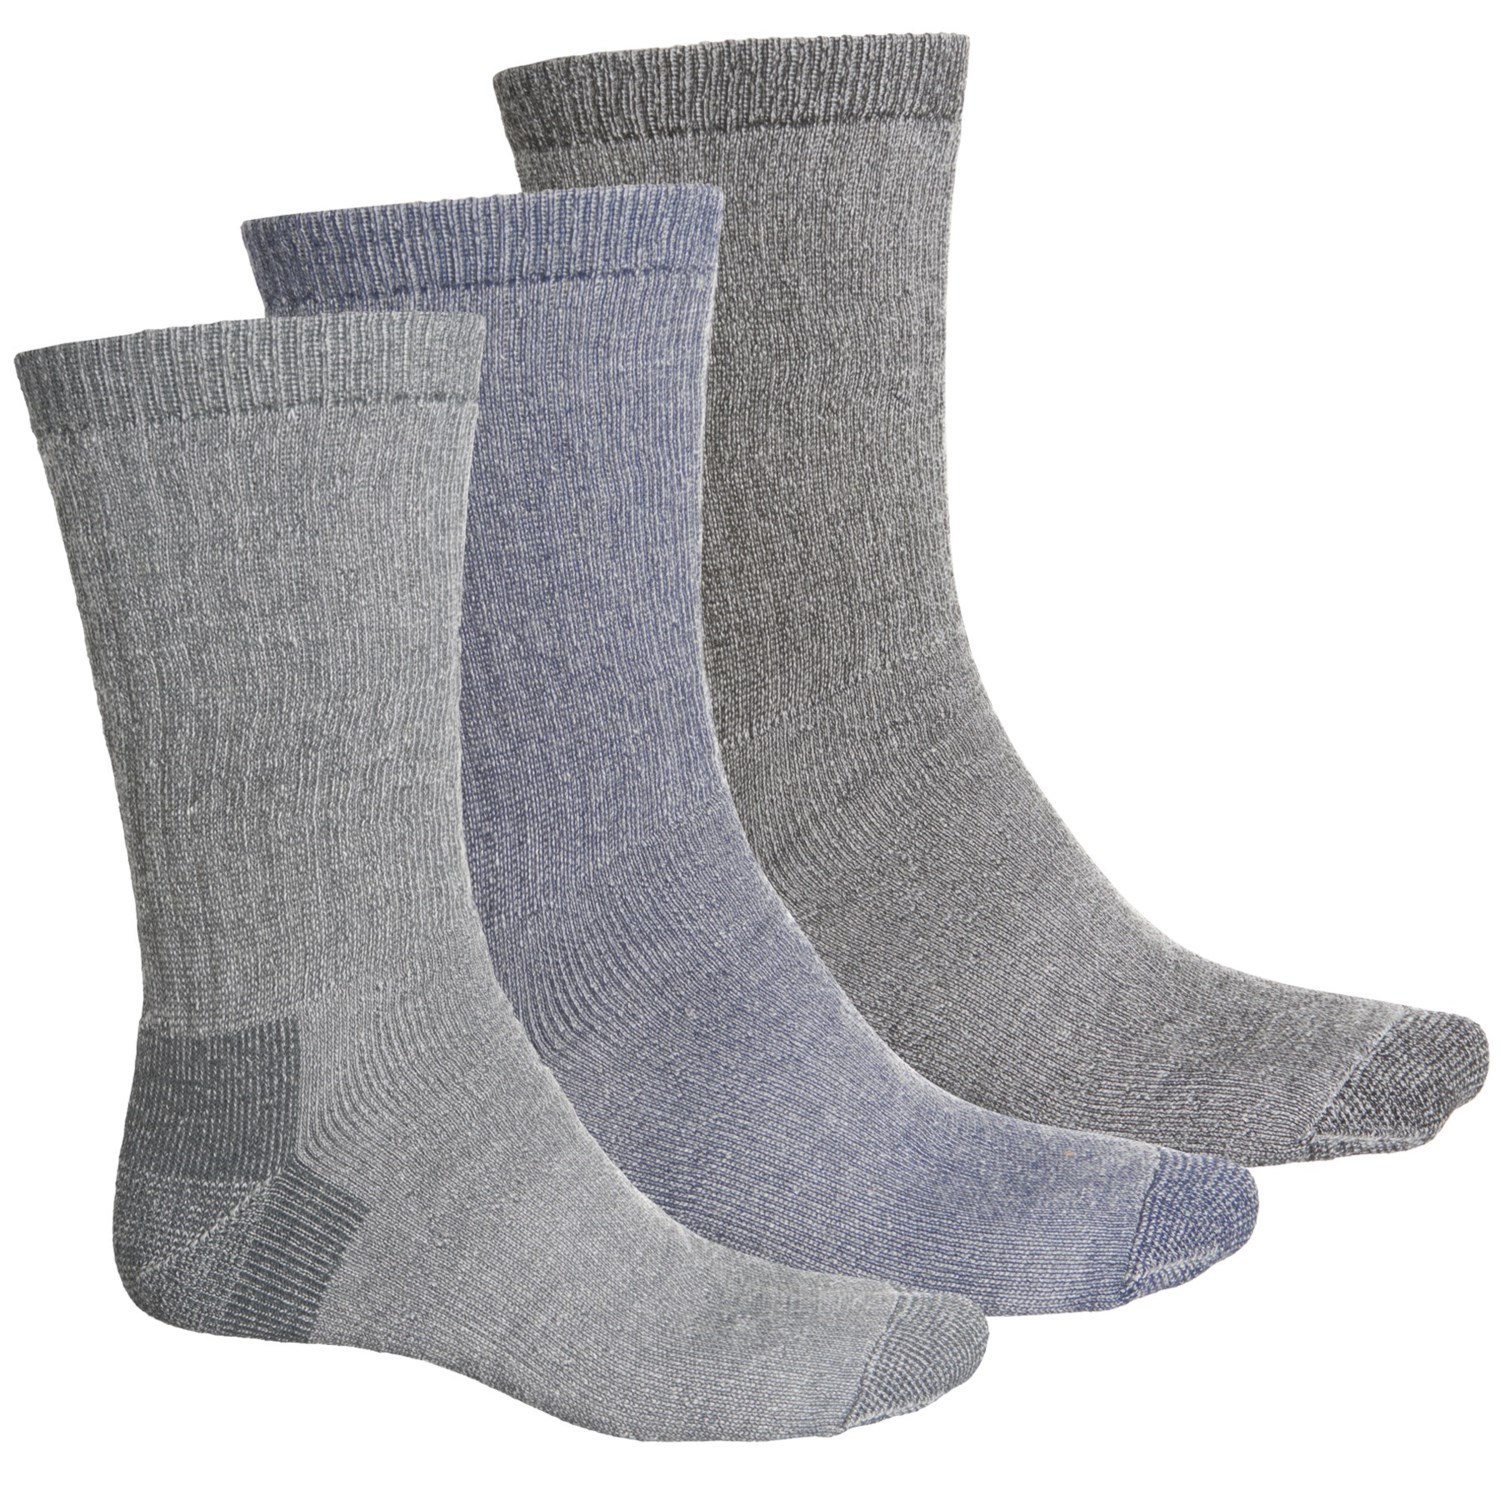 men's wool boot socks